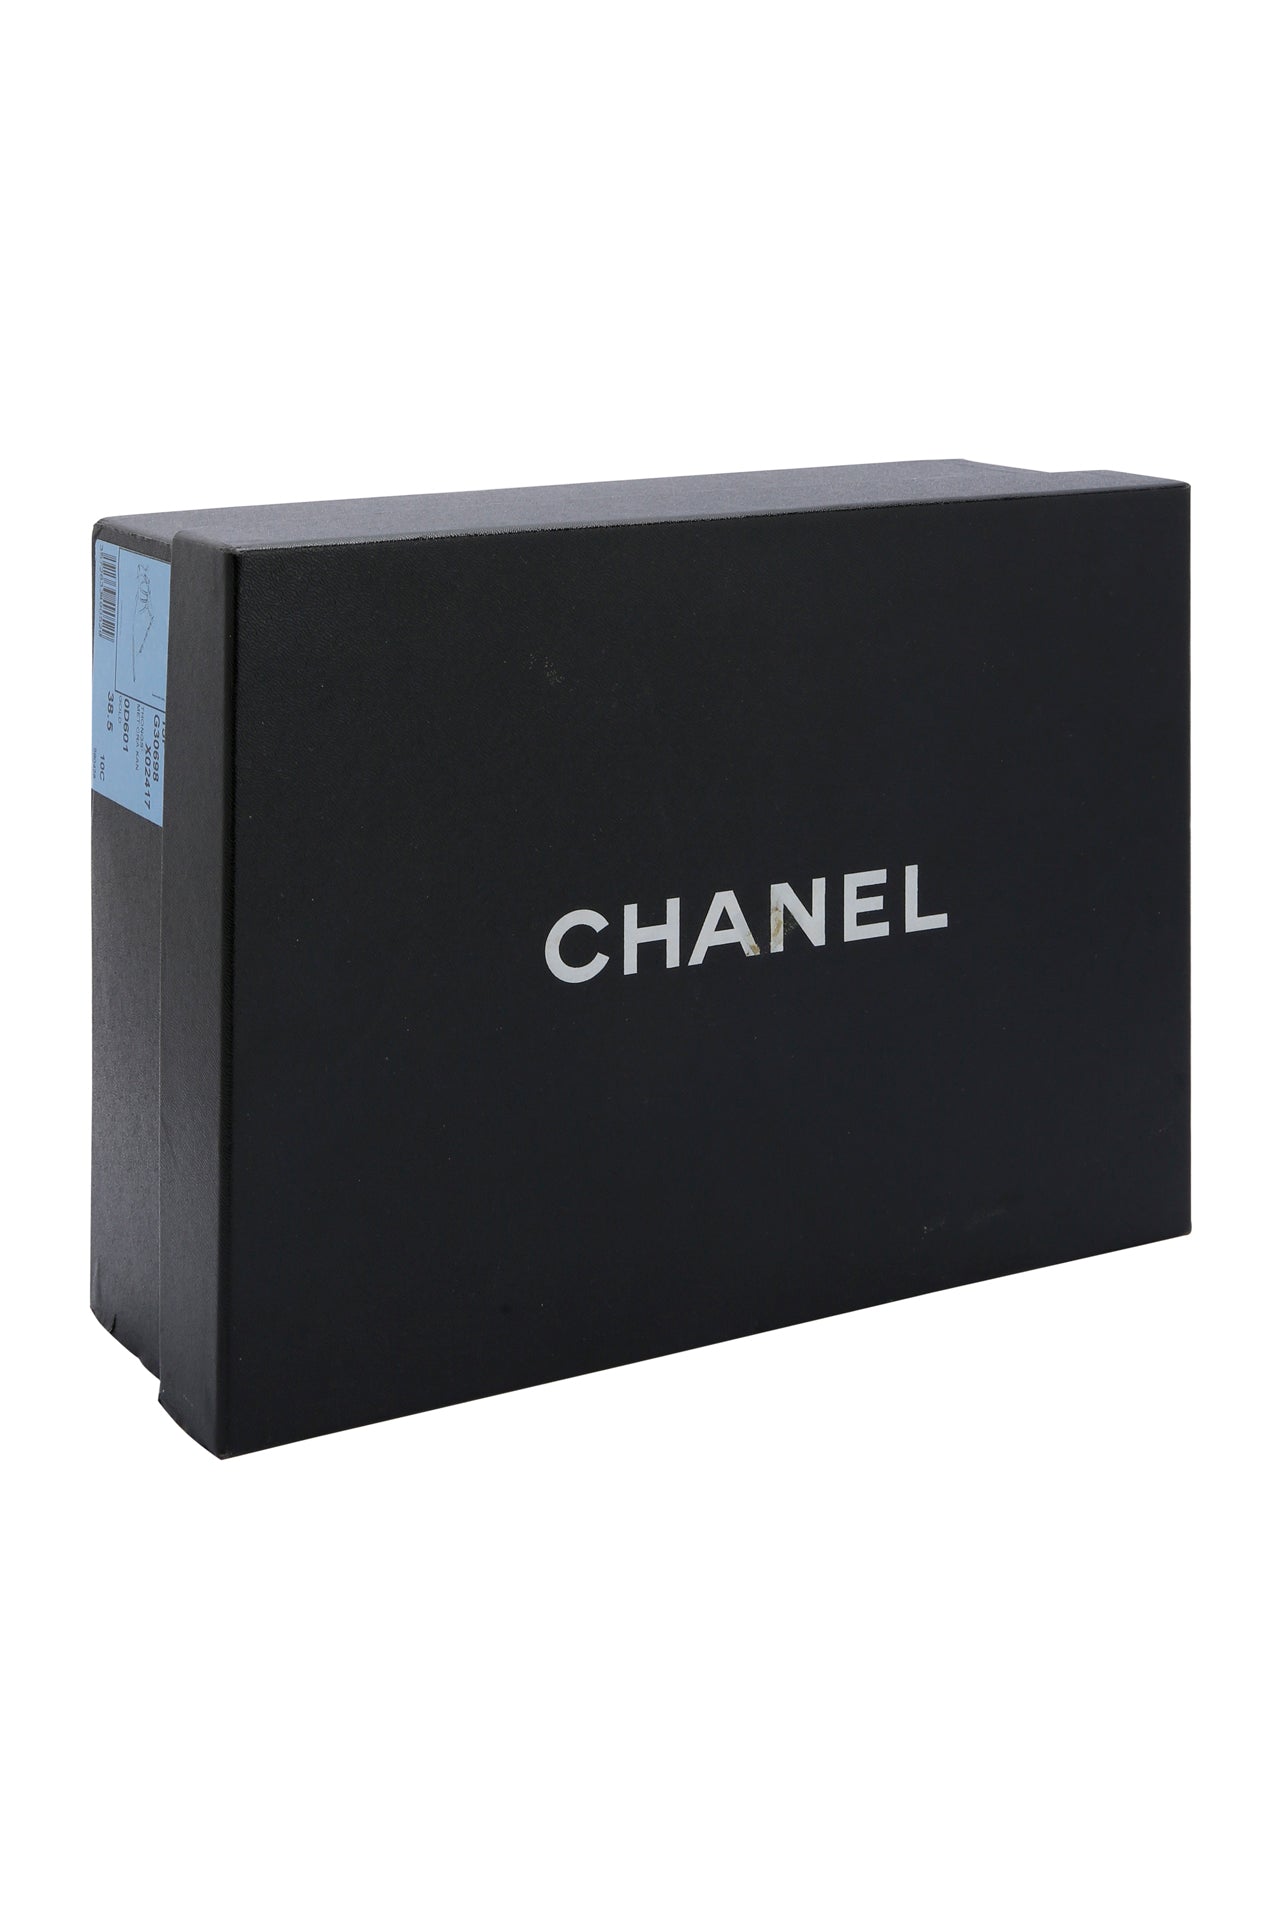 Chanel Metallic Gold Leather Embellished Flat Sandals Size EU 38.5C